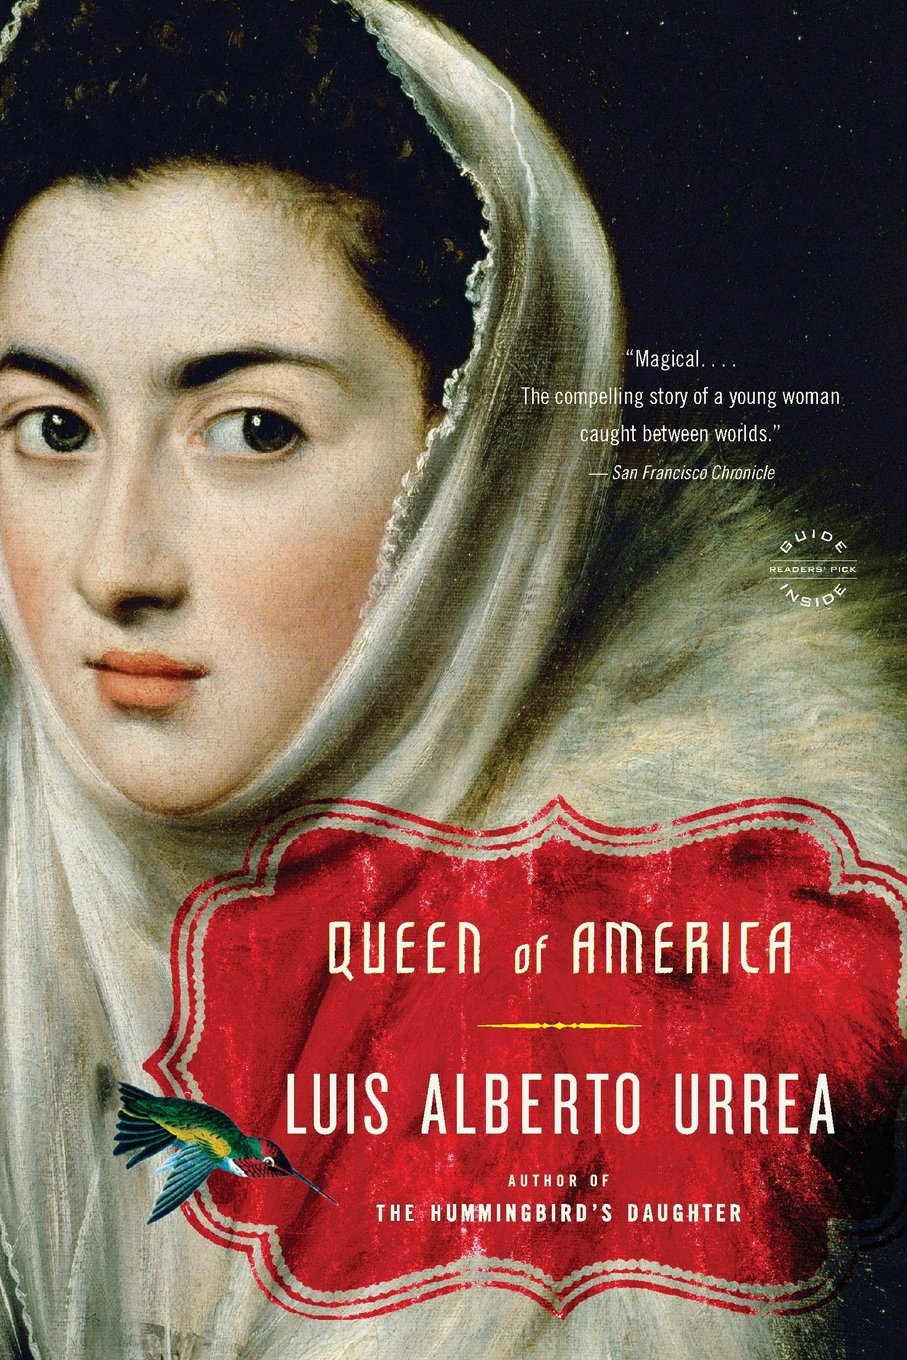 Queen of America: A Novel by Luis Alberto Urrea